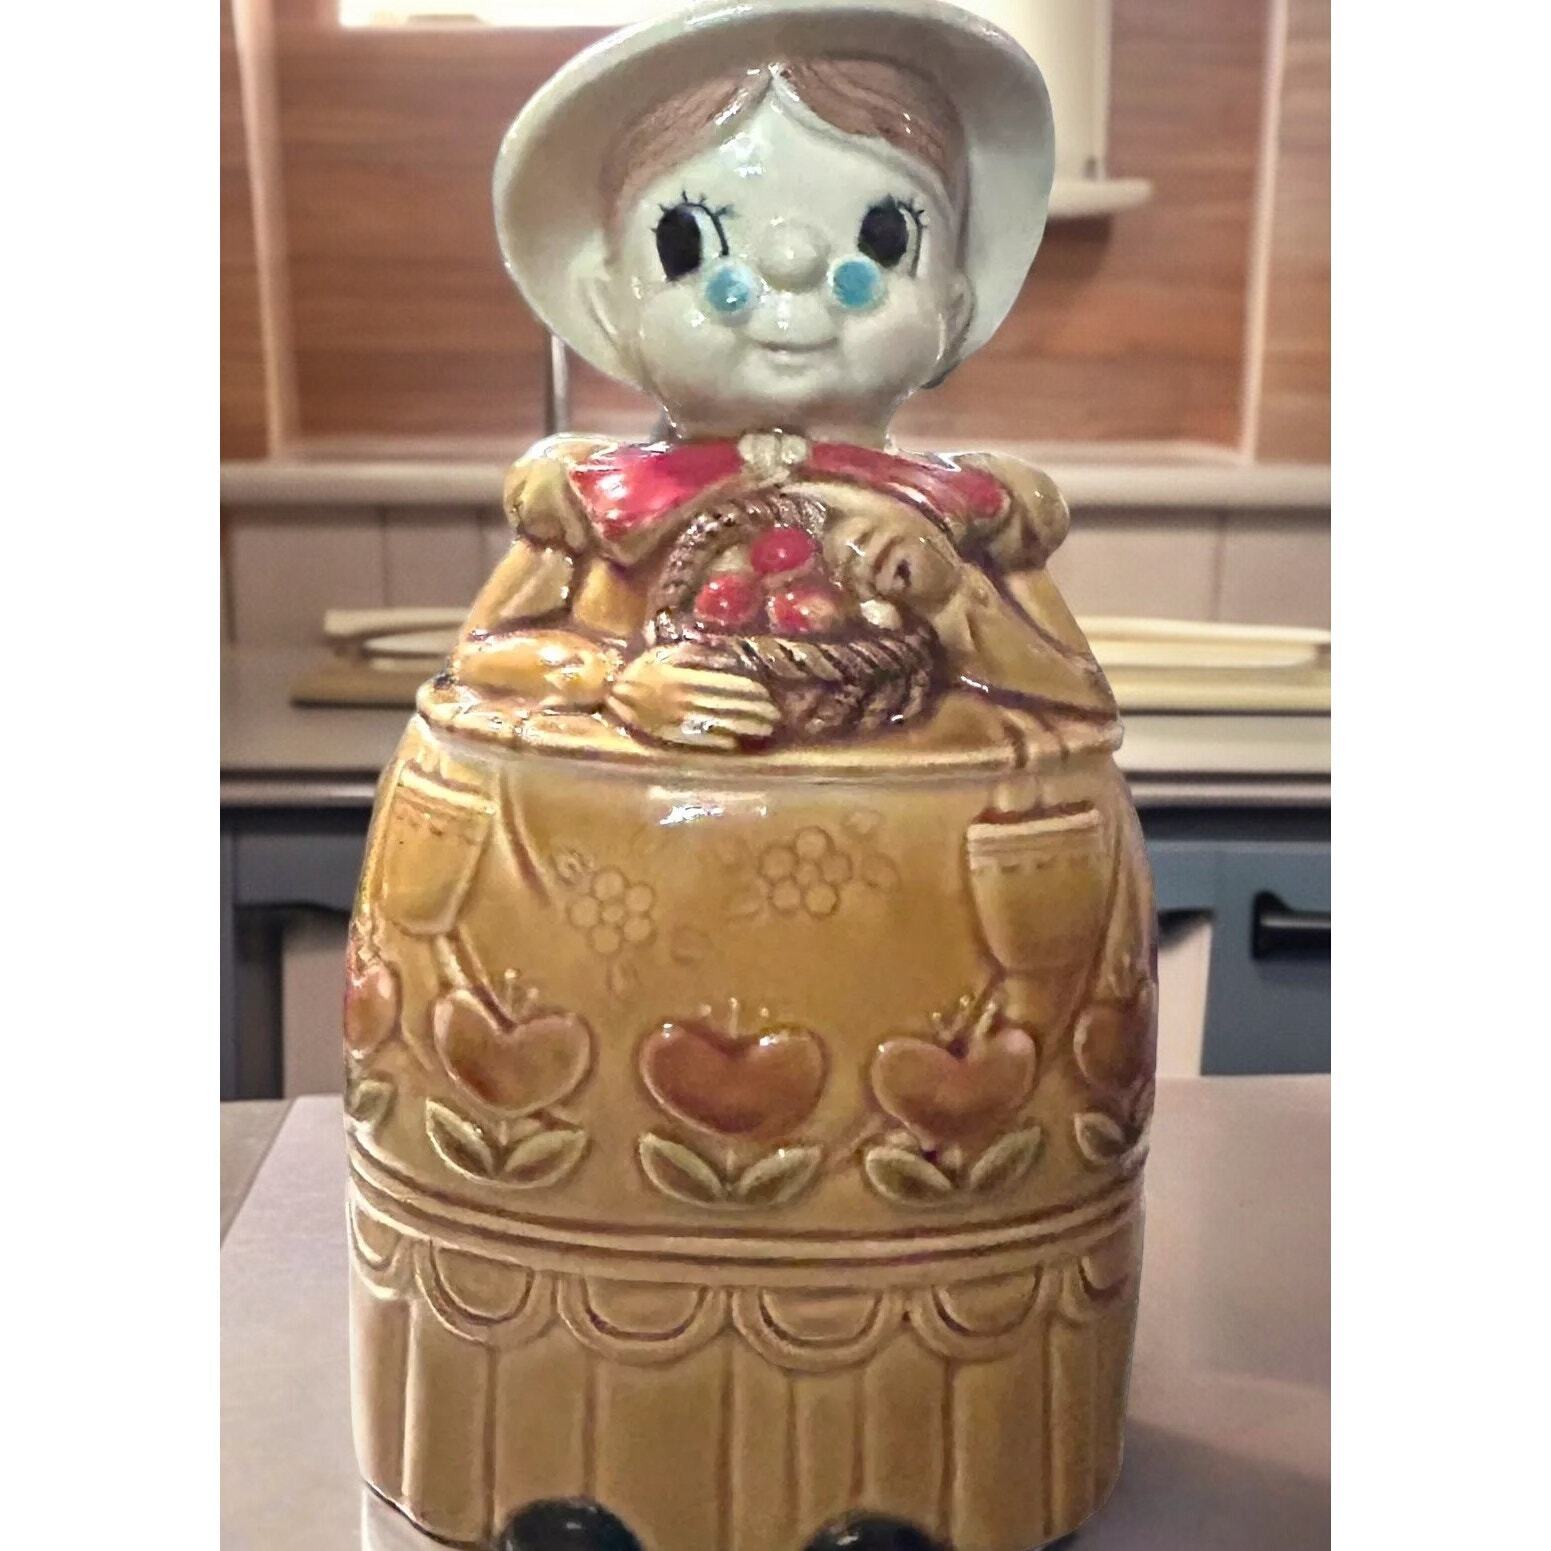 Vtg Grandma Cookie Jar Ceramic Japan Apples in Basket Hat Collectible Home Decor